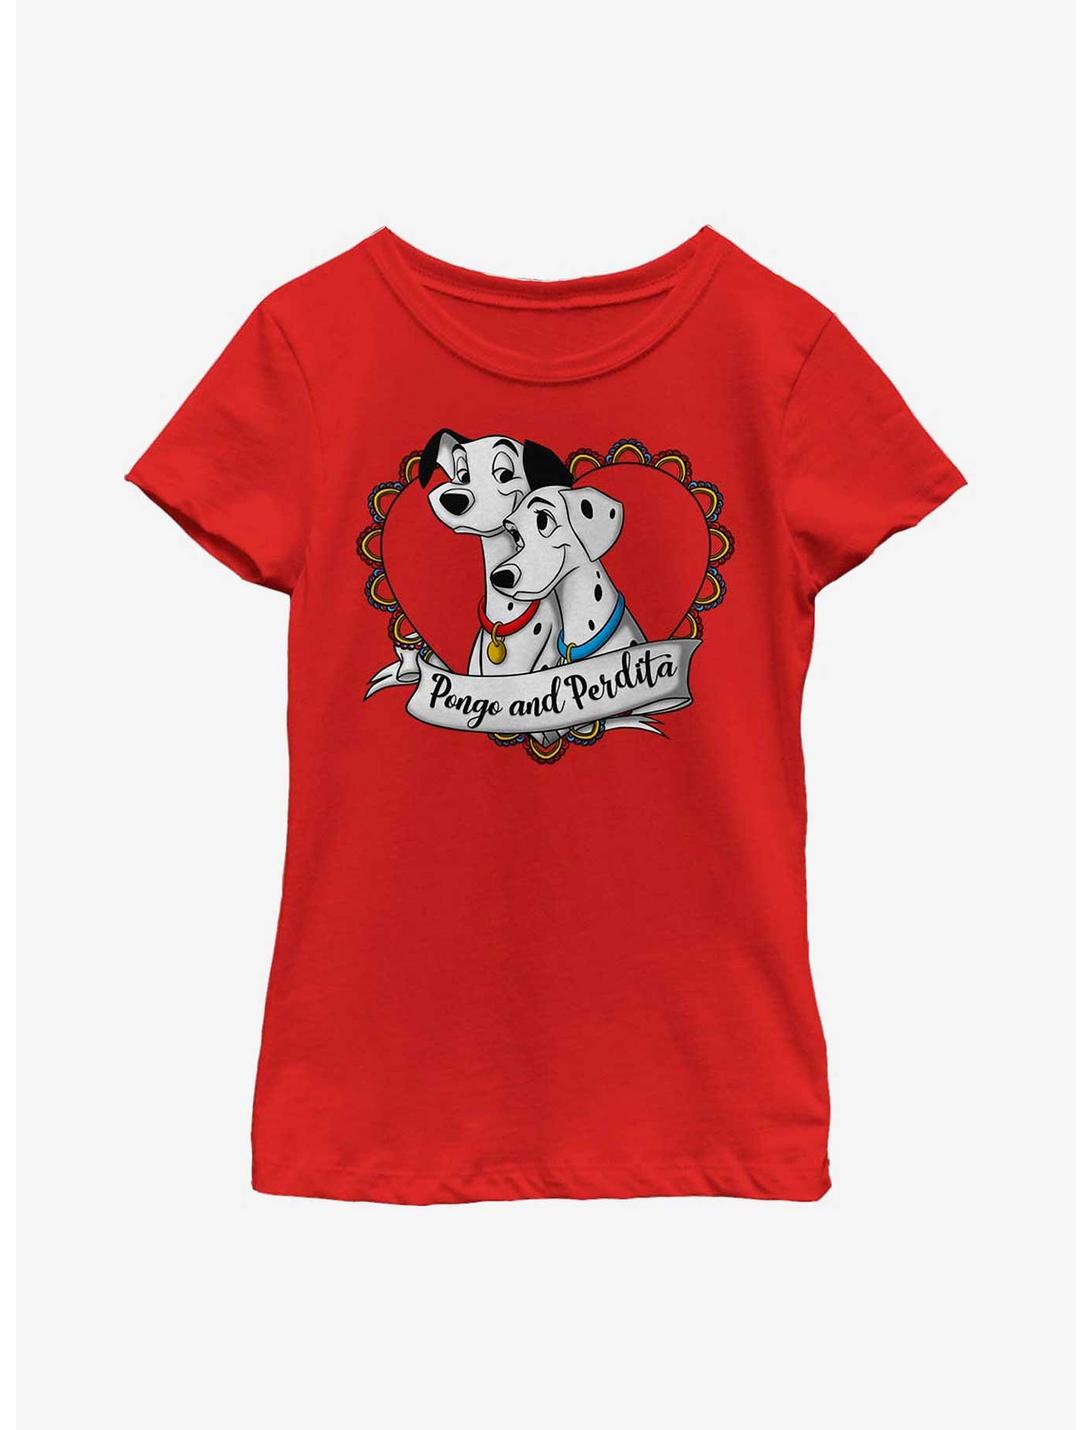 Disney 101 Dalmatians Pongo And Perdita Youth Girls T-Shirt, RED, hi-res